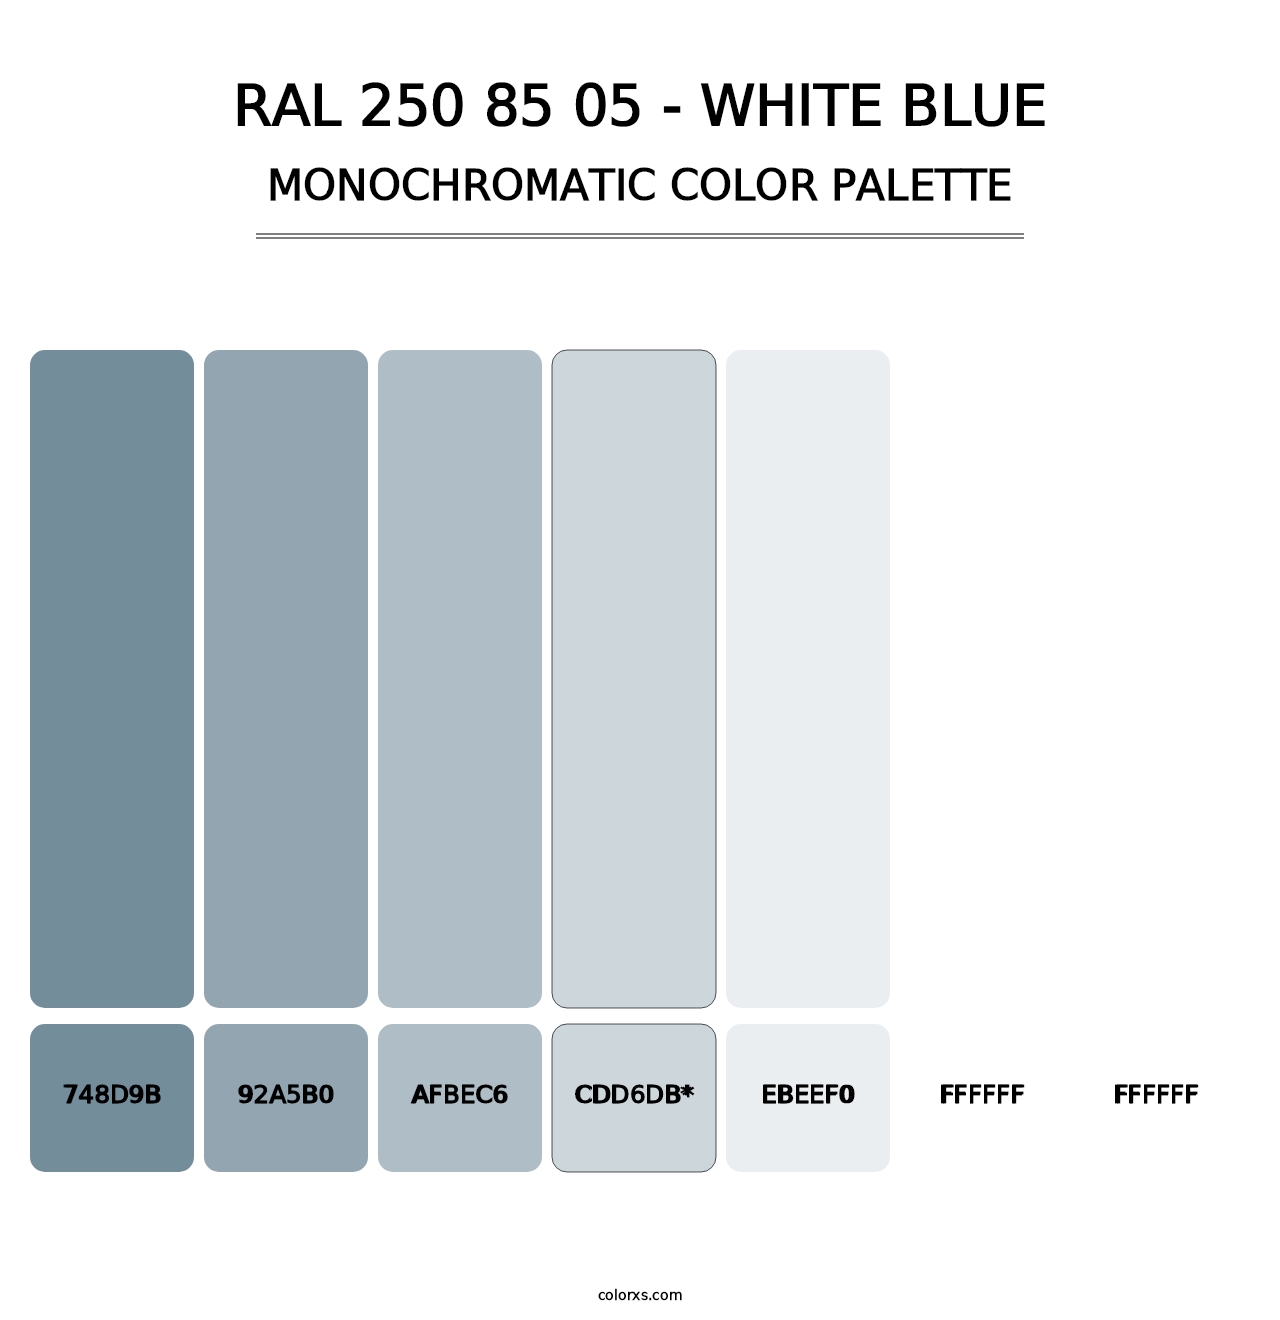 RAL 250 85 05 - White Blue - Monochromatic Color Palette